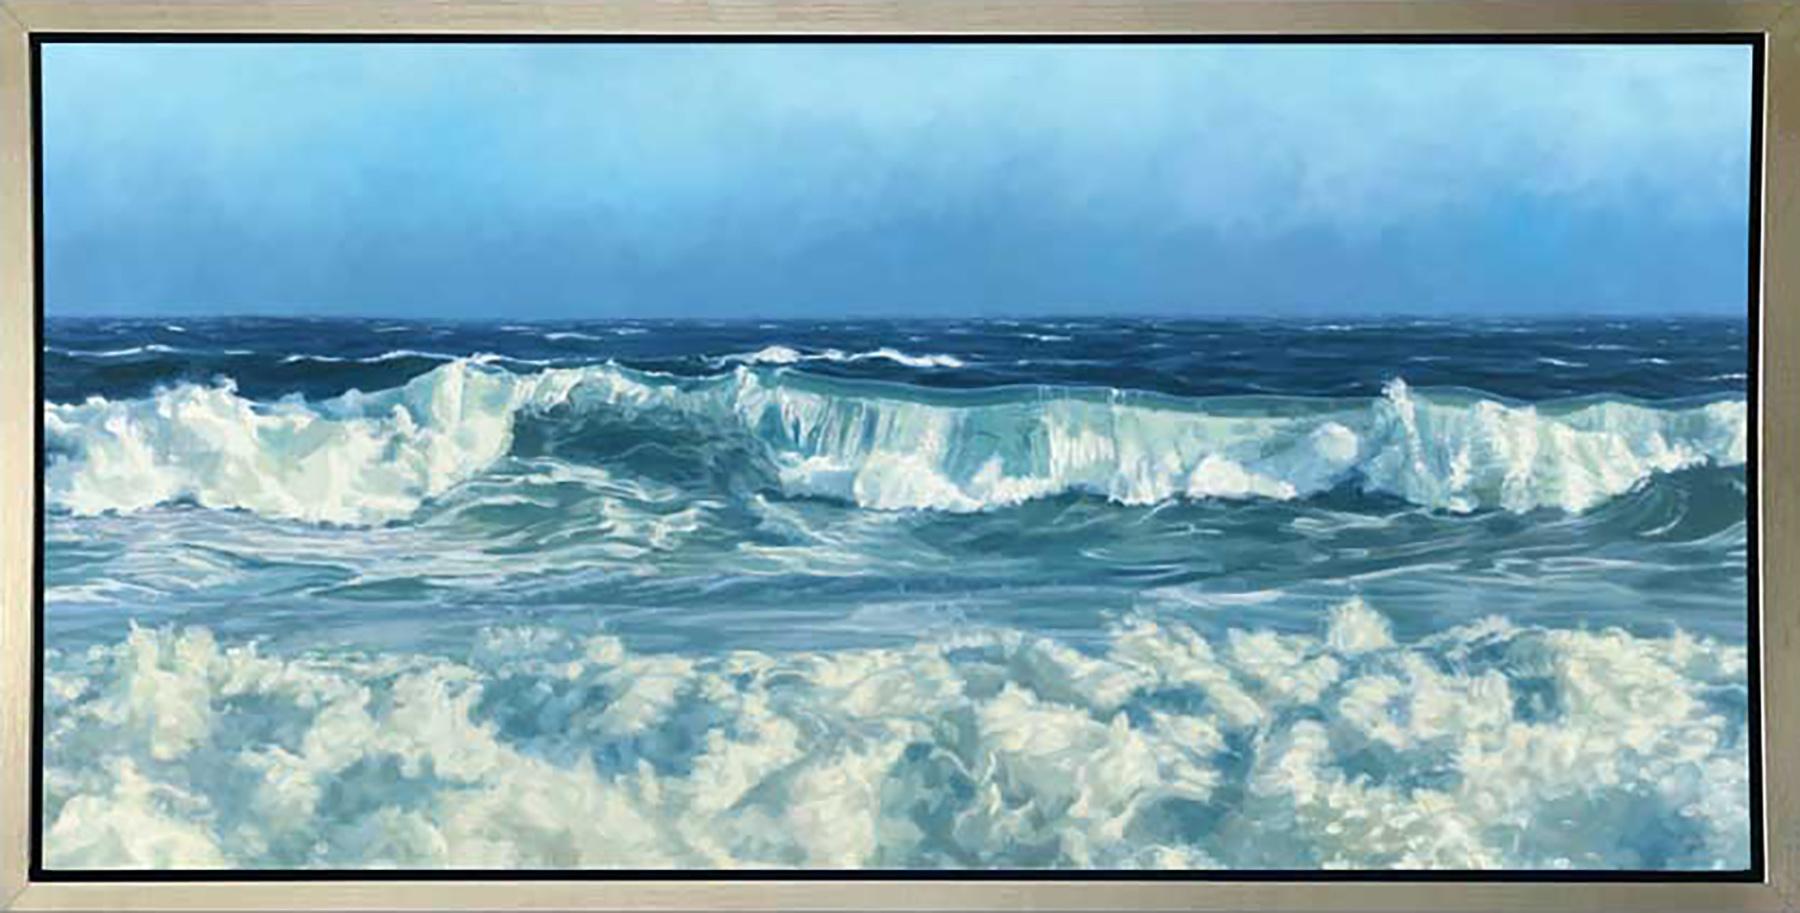 John Harris (painter) Landscape Print - "Oceanic, " Limited Edition Giclee Print, 24" x 48"